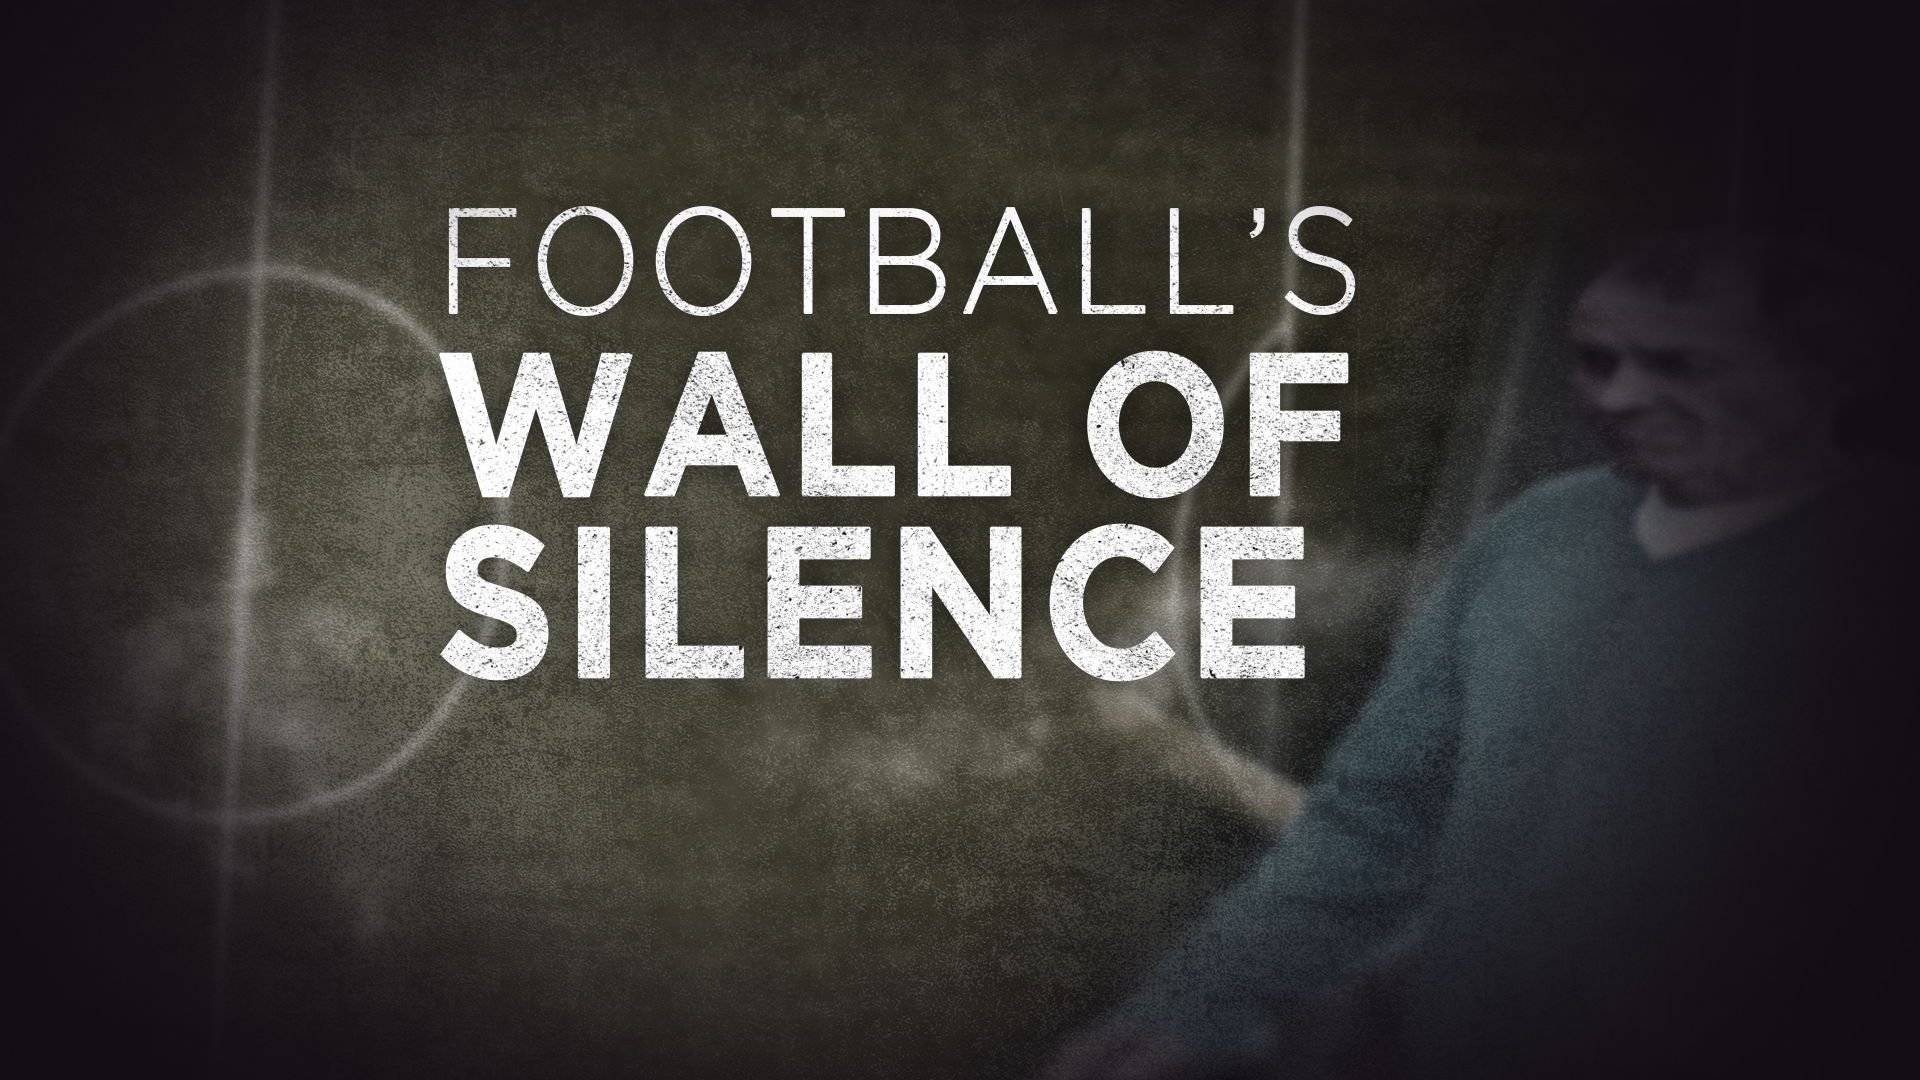 WALL OF SILENCE